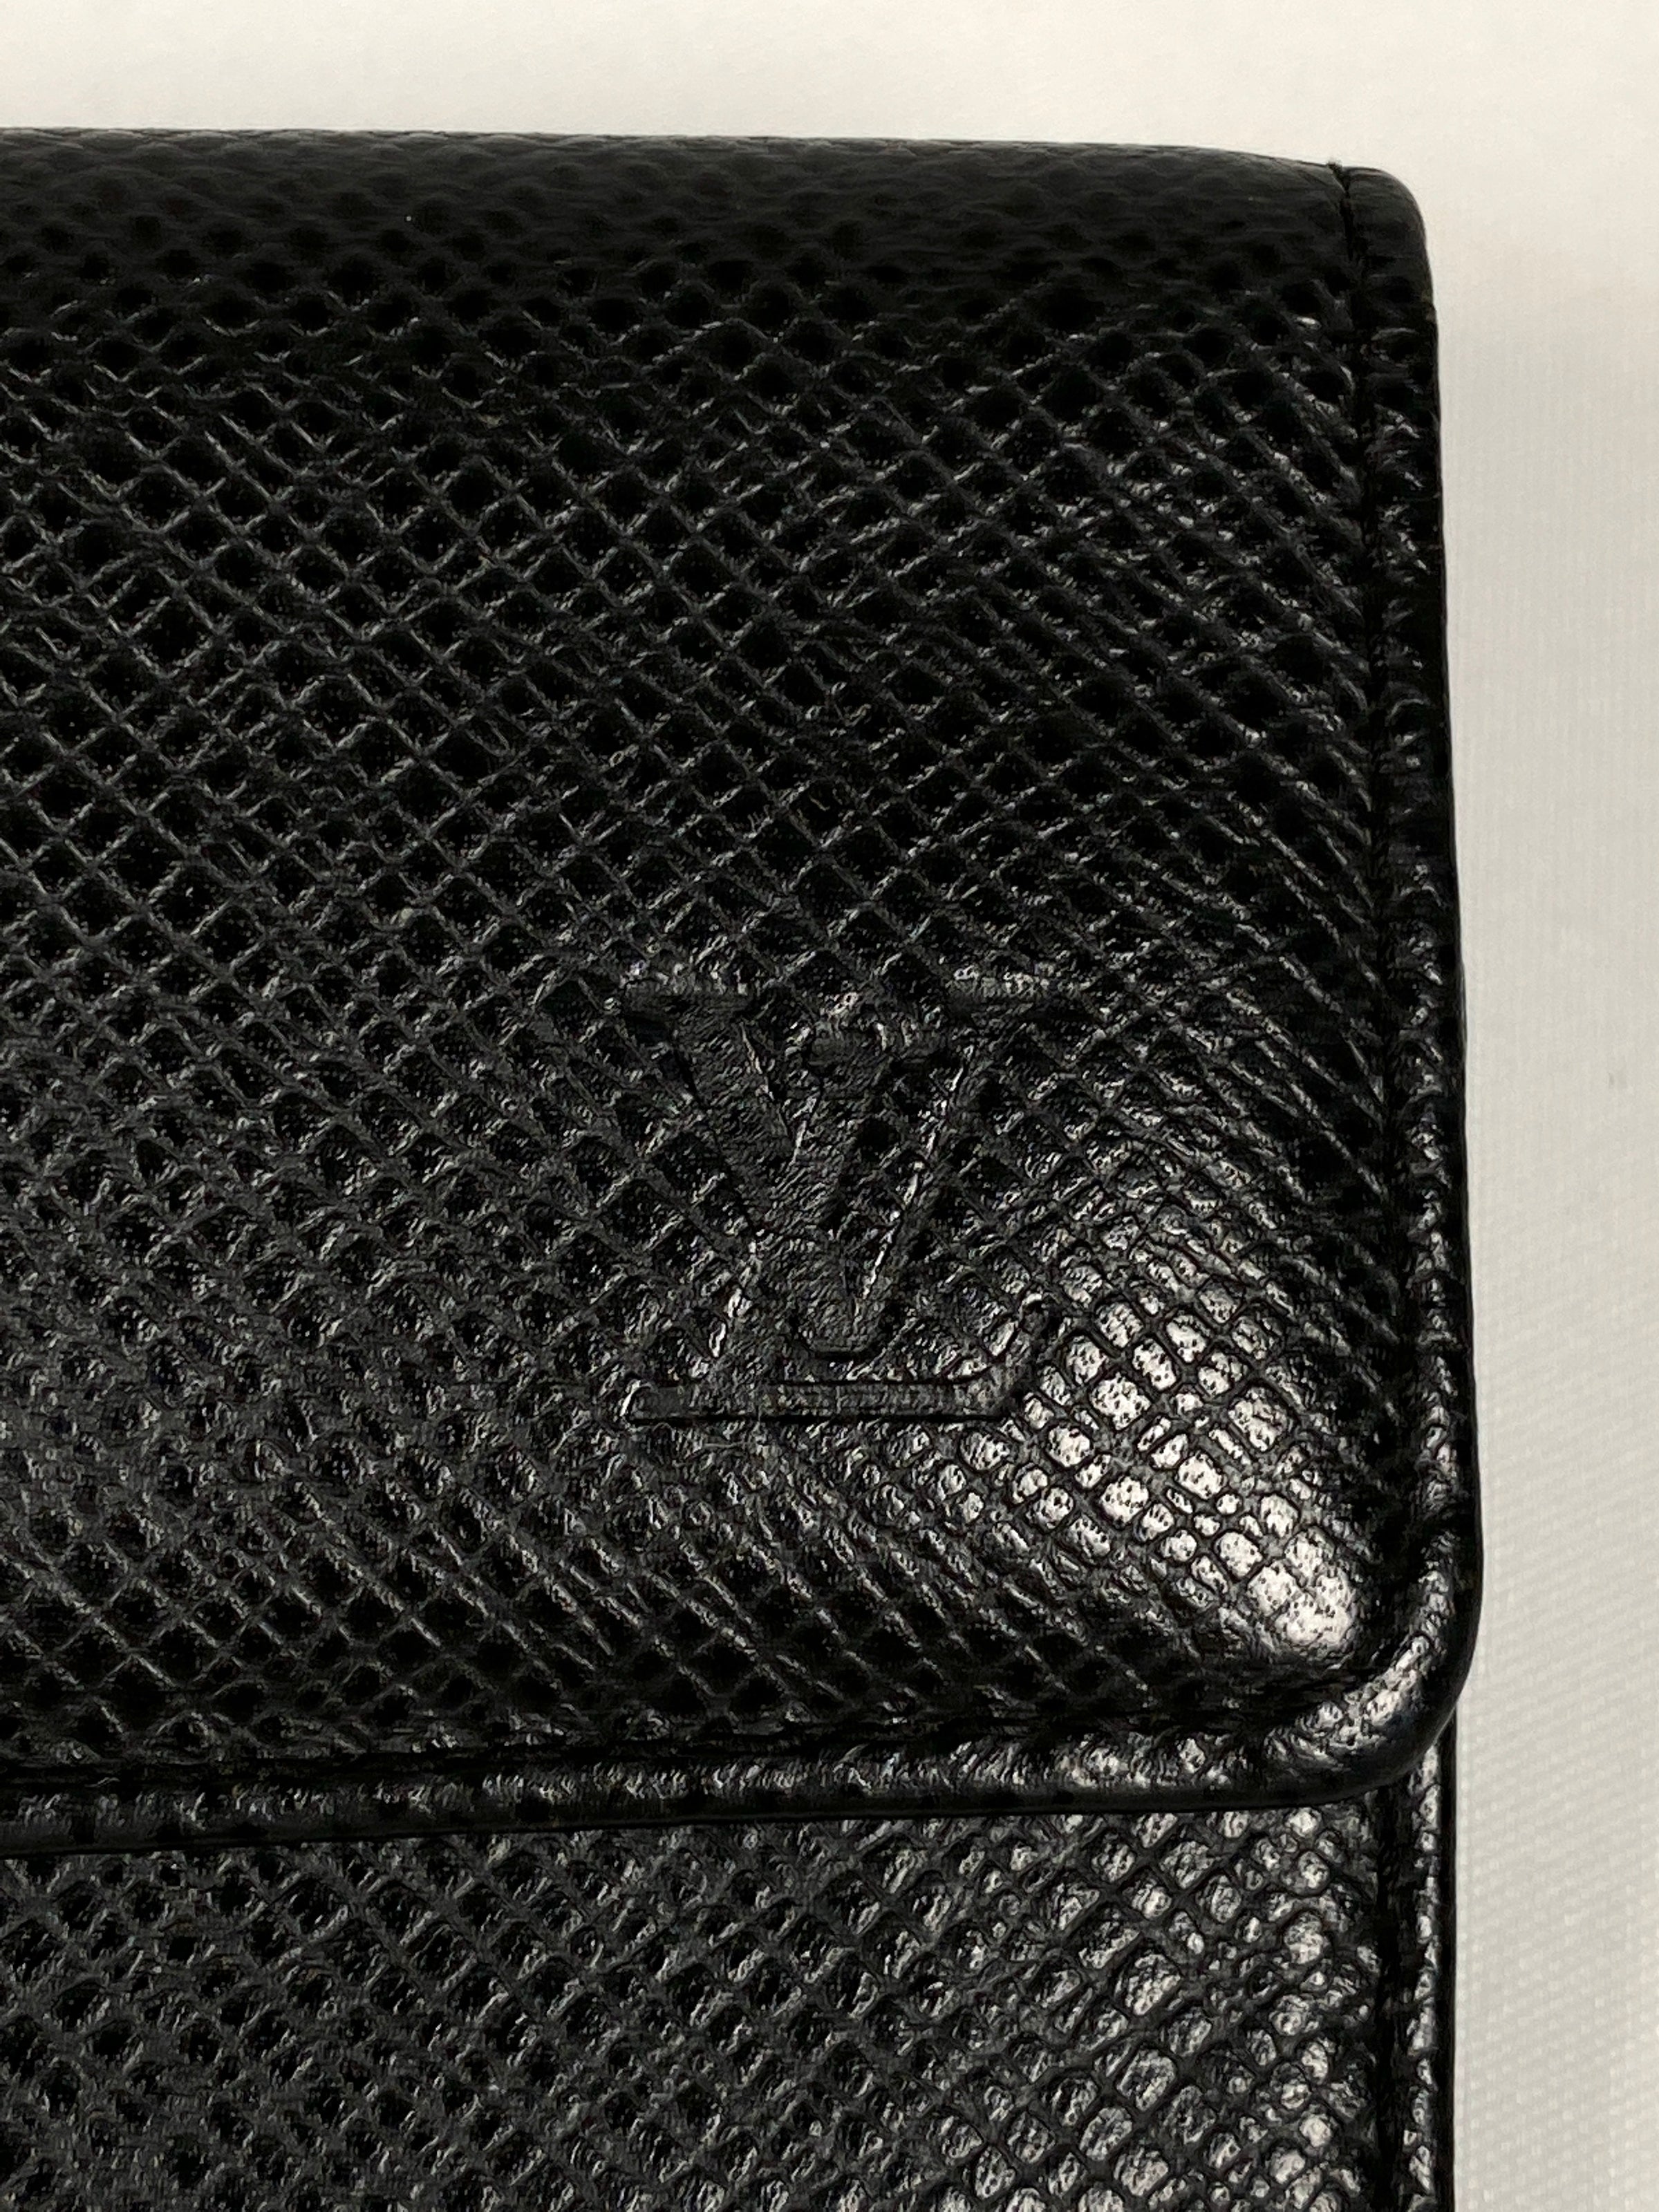 Louis Vuitton Taiga Multicles Key Holder 17LR0621